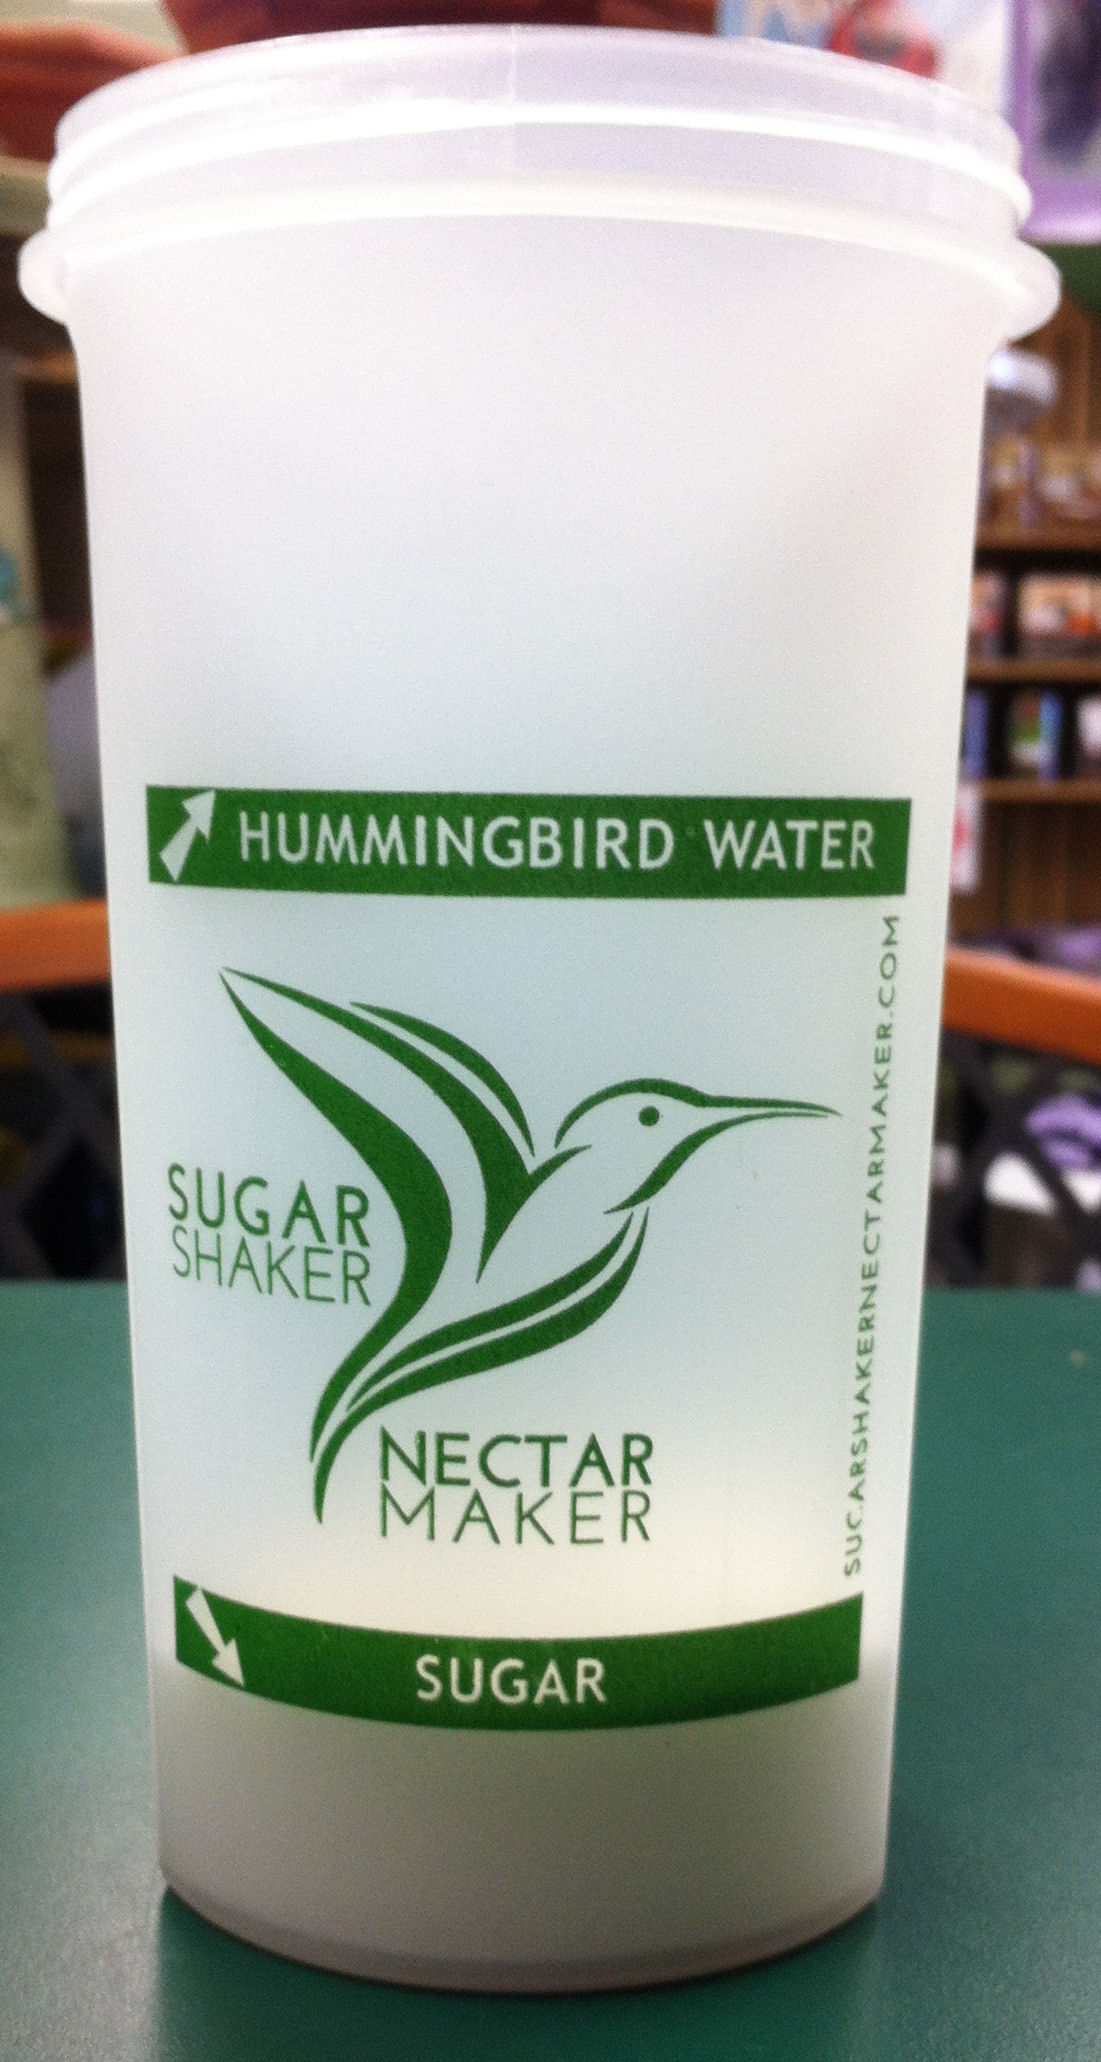 The original Sugar Shaker Nectar Maker